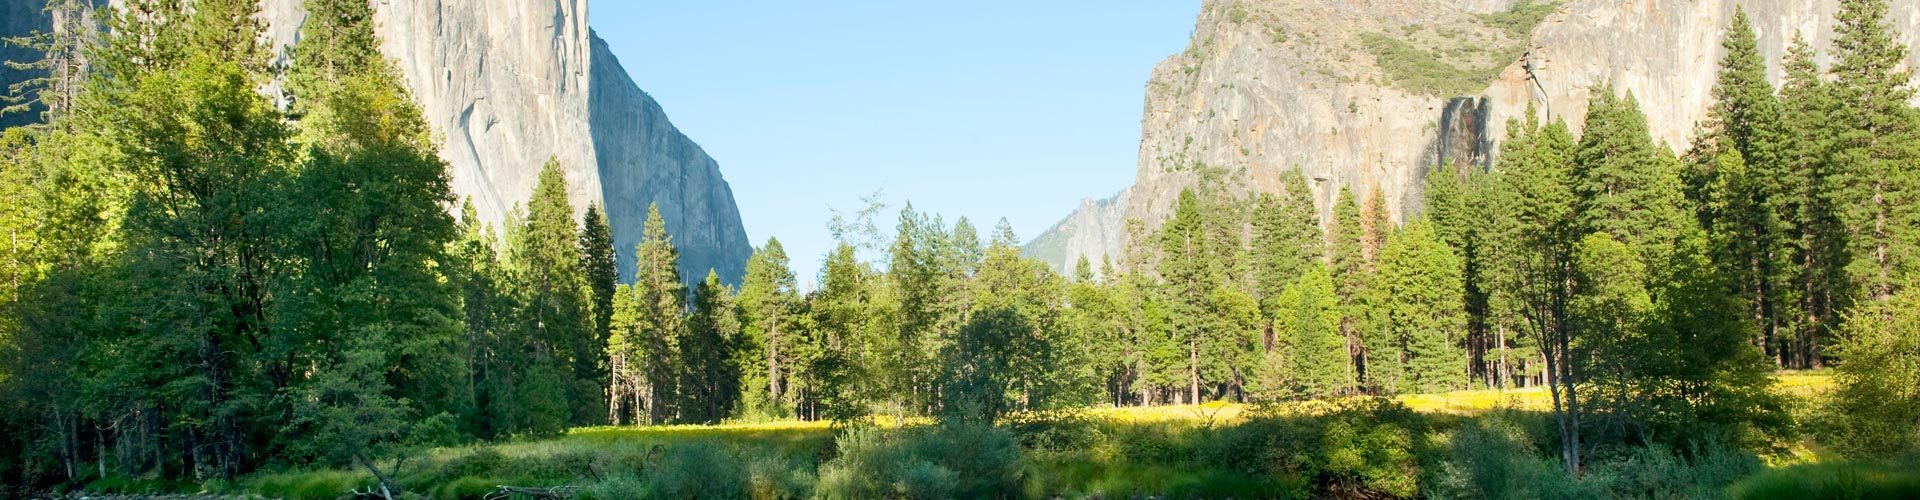 Yosemite Nationalpark, Kalifornien